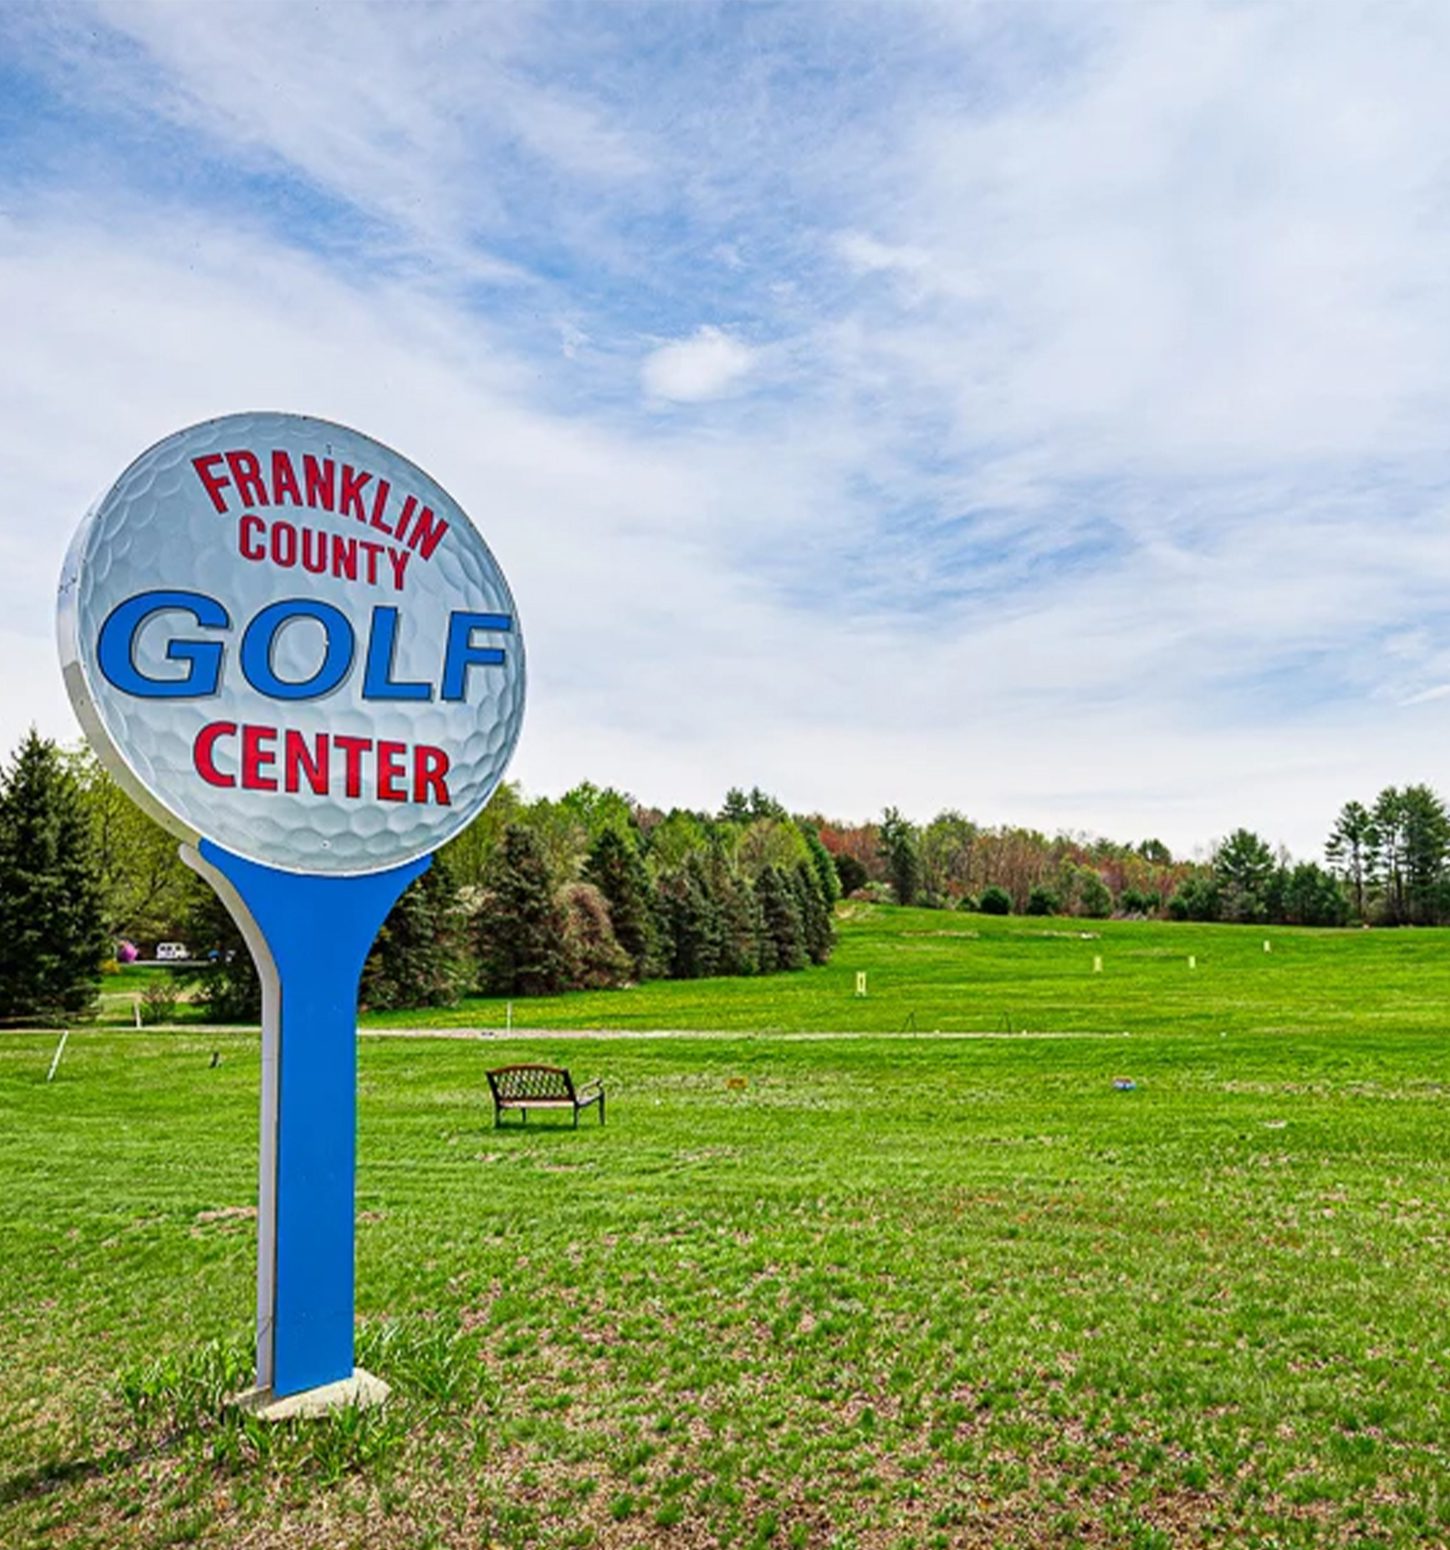 Franklin County Golf Center